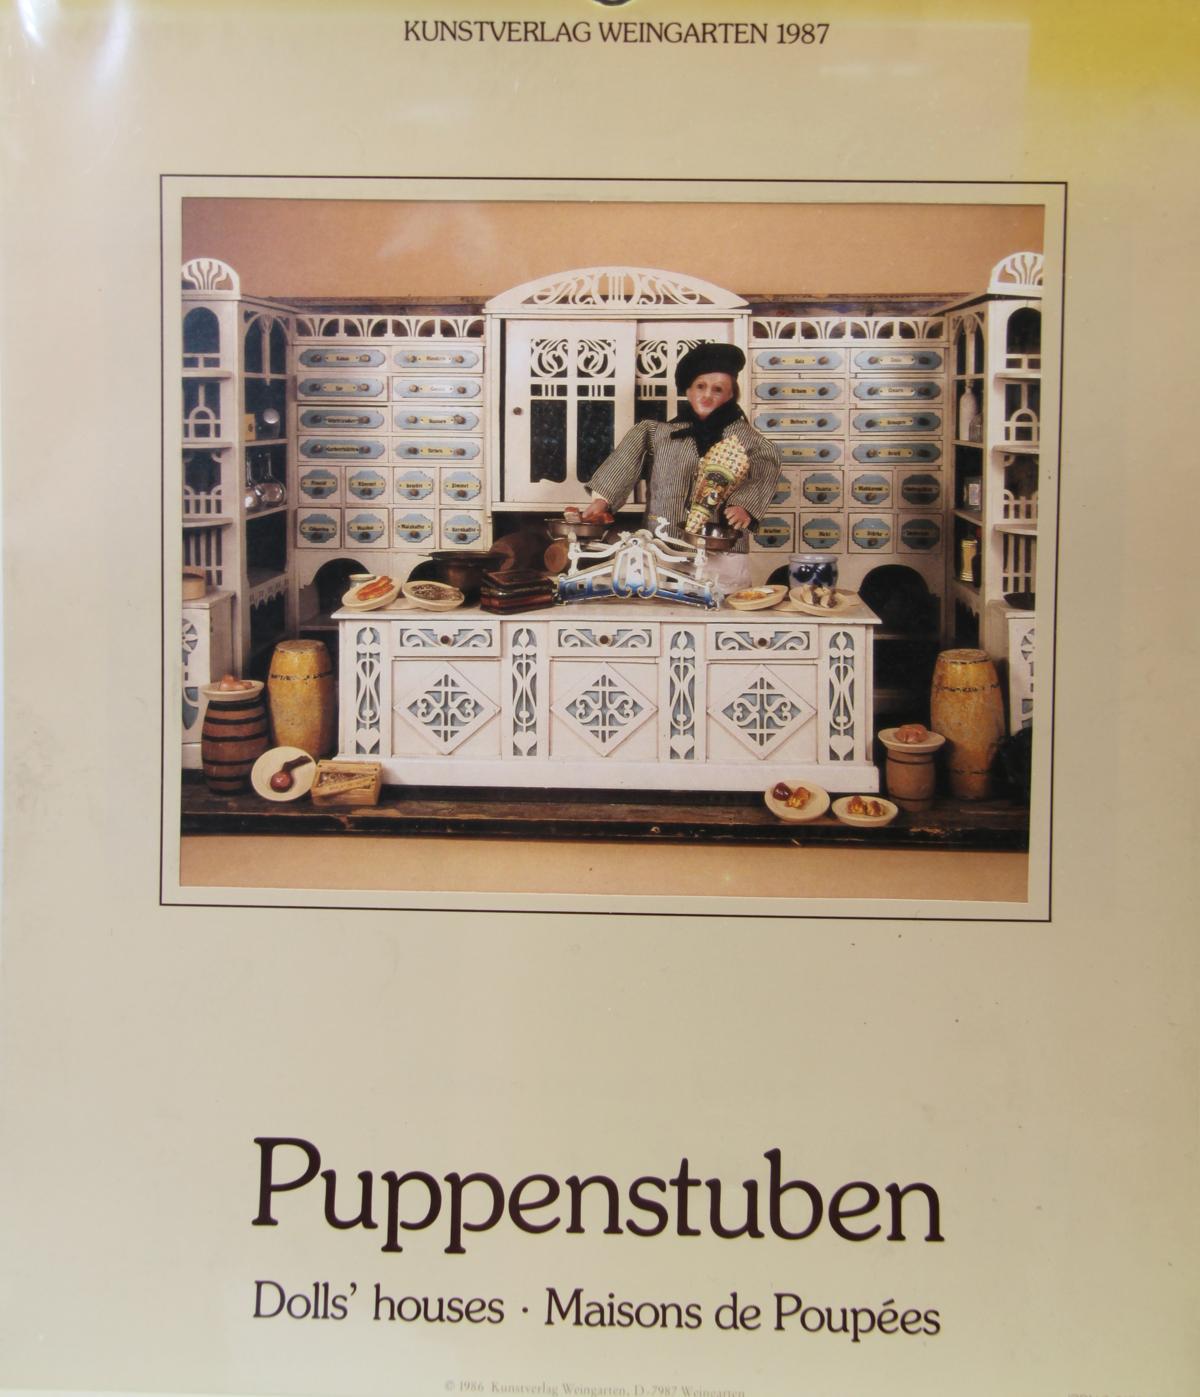 Kunstverlag Weingarten "Puppenstuben" 1987